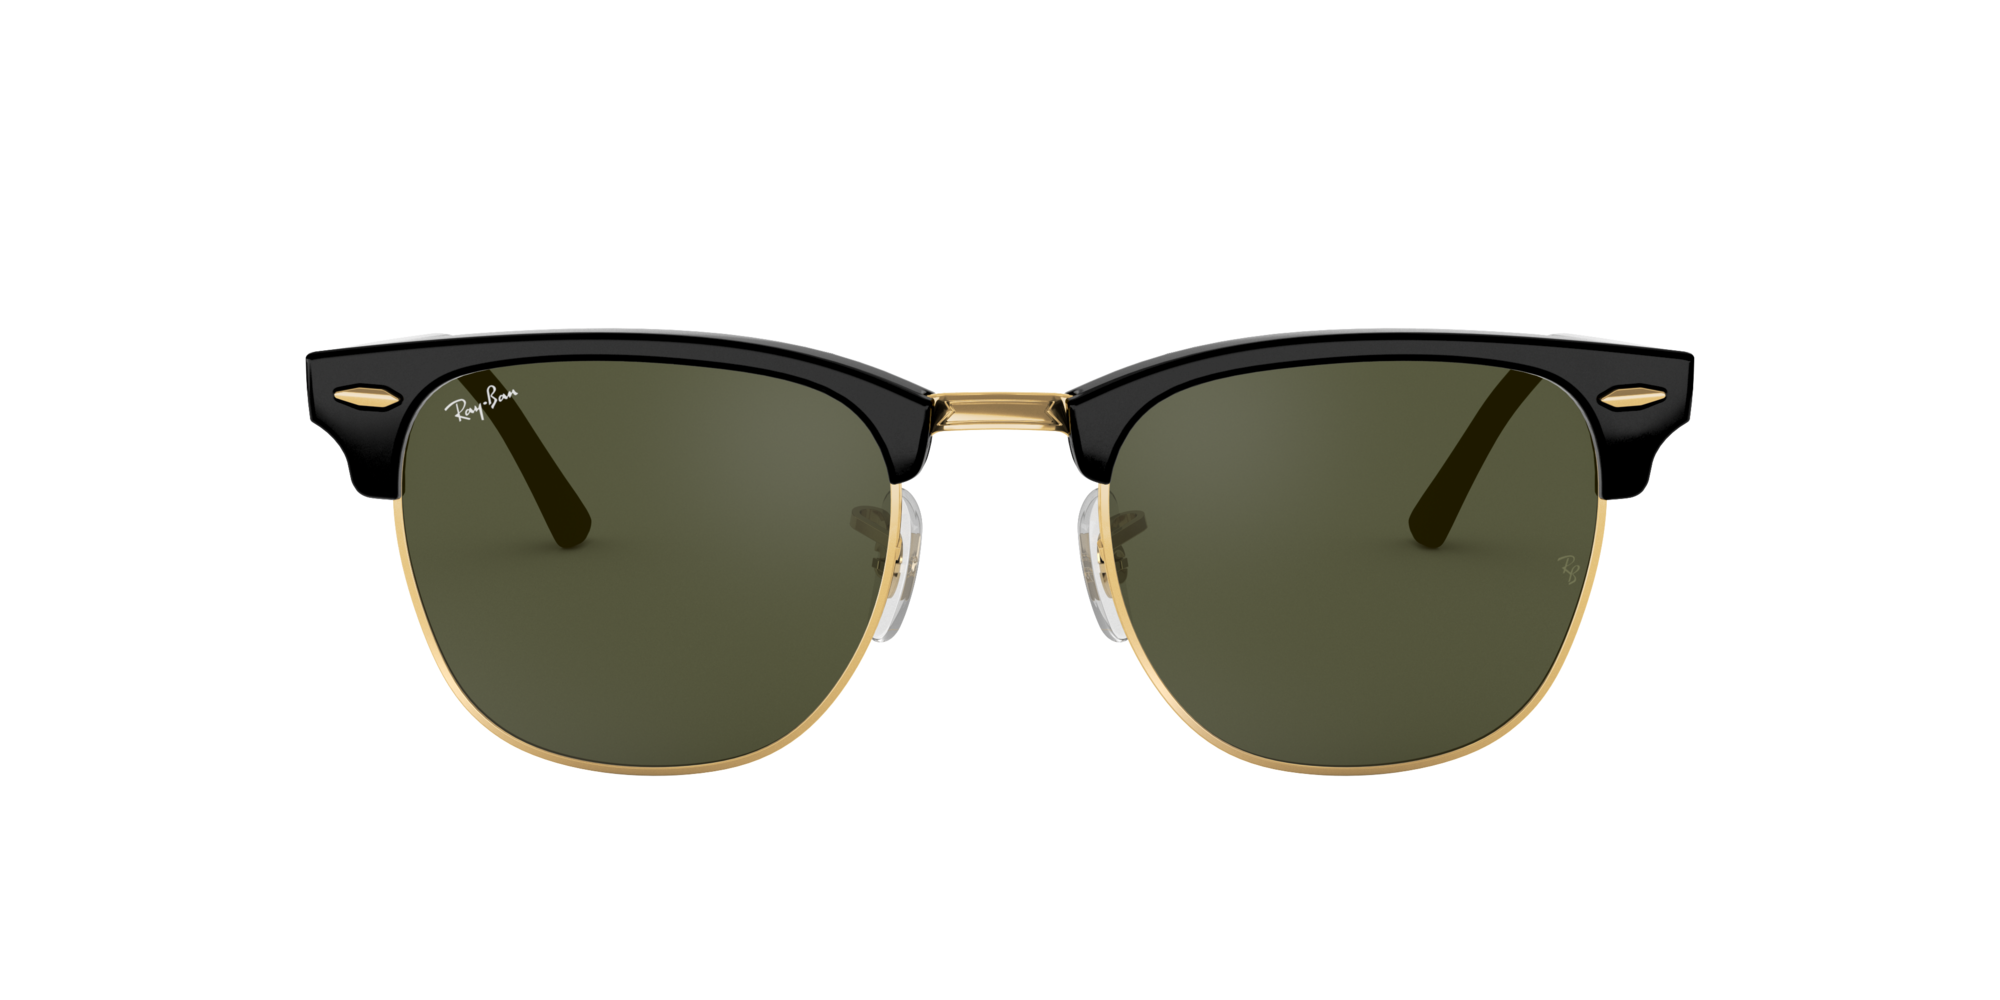 average price of ray ban sunglasses